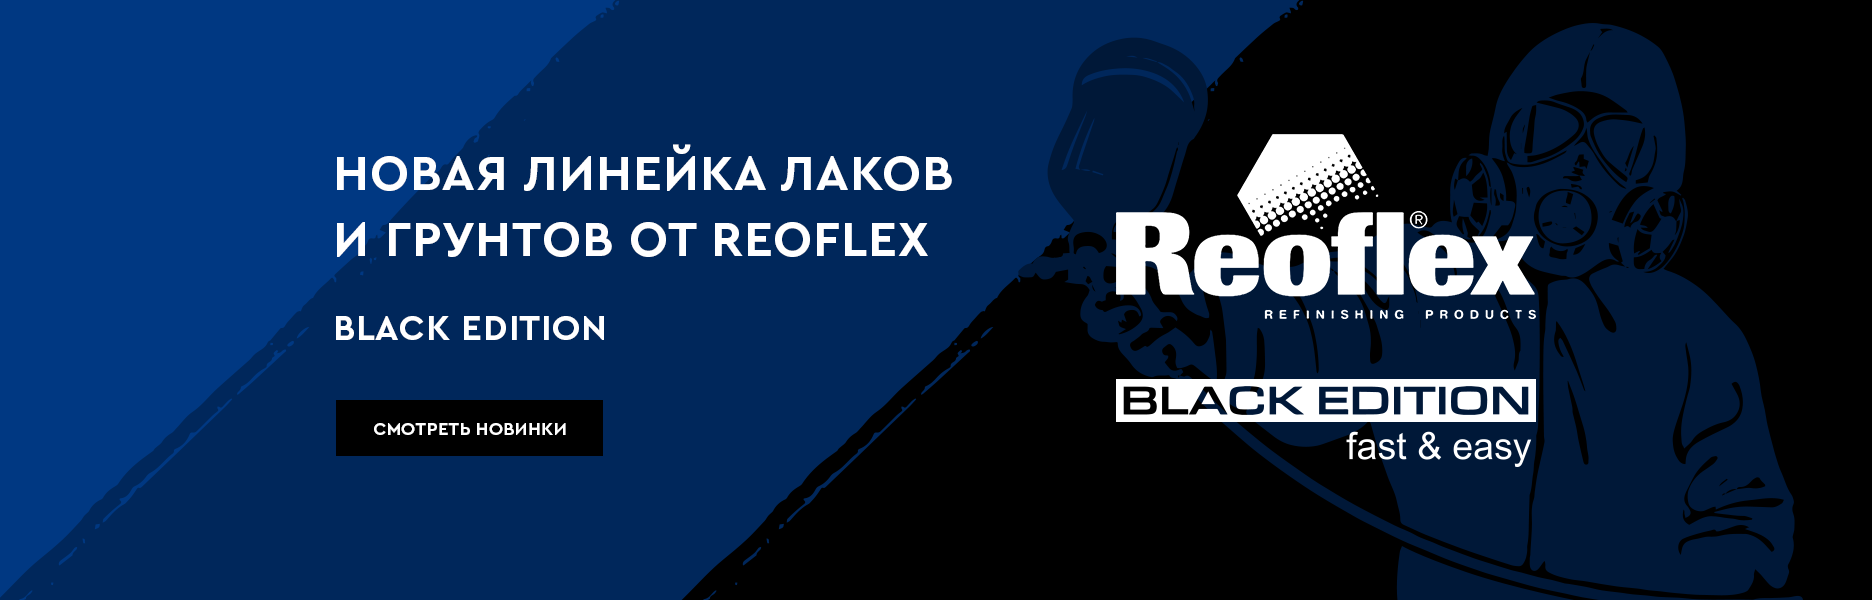 Серия Black Edition от Reoflex